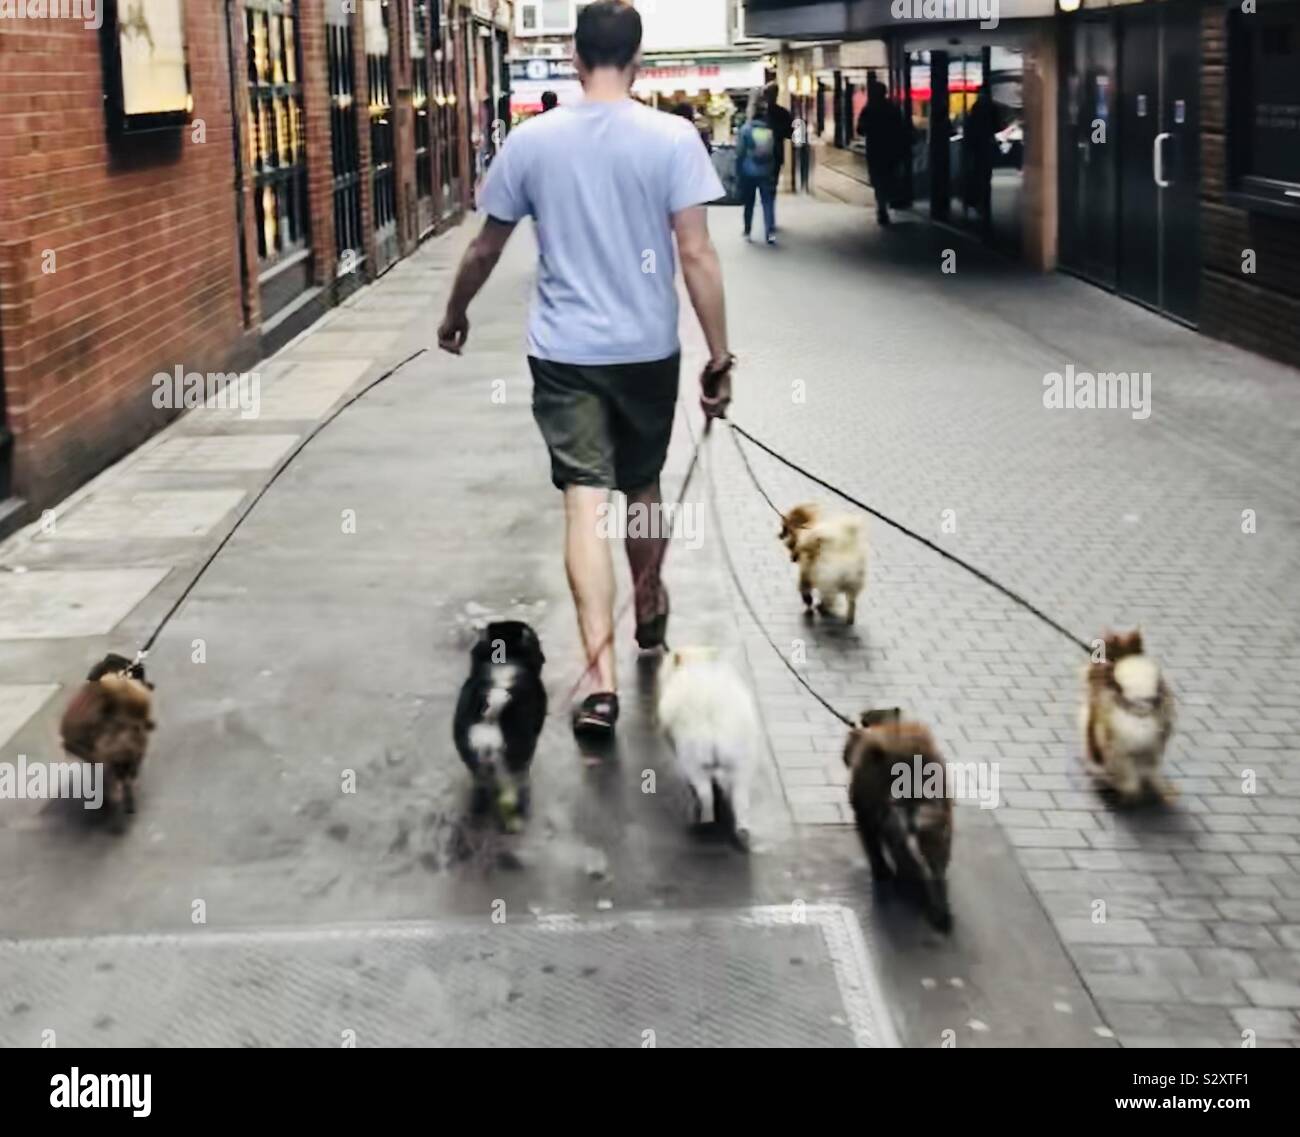 Man walking 6 small dogs Stock Photo